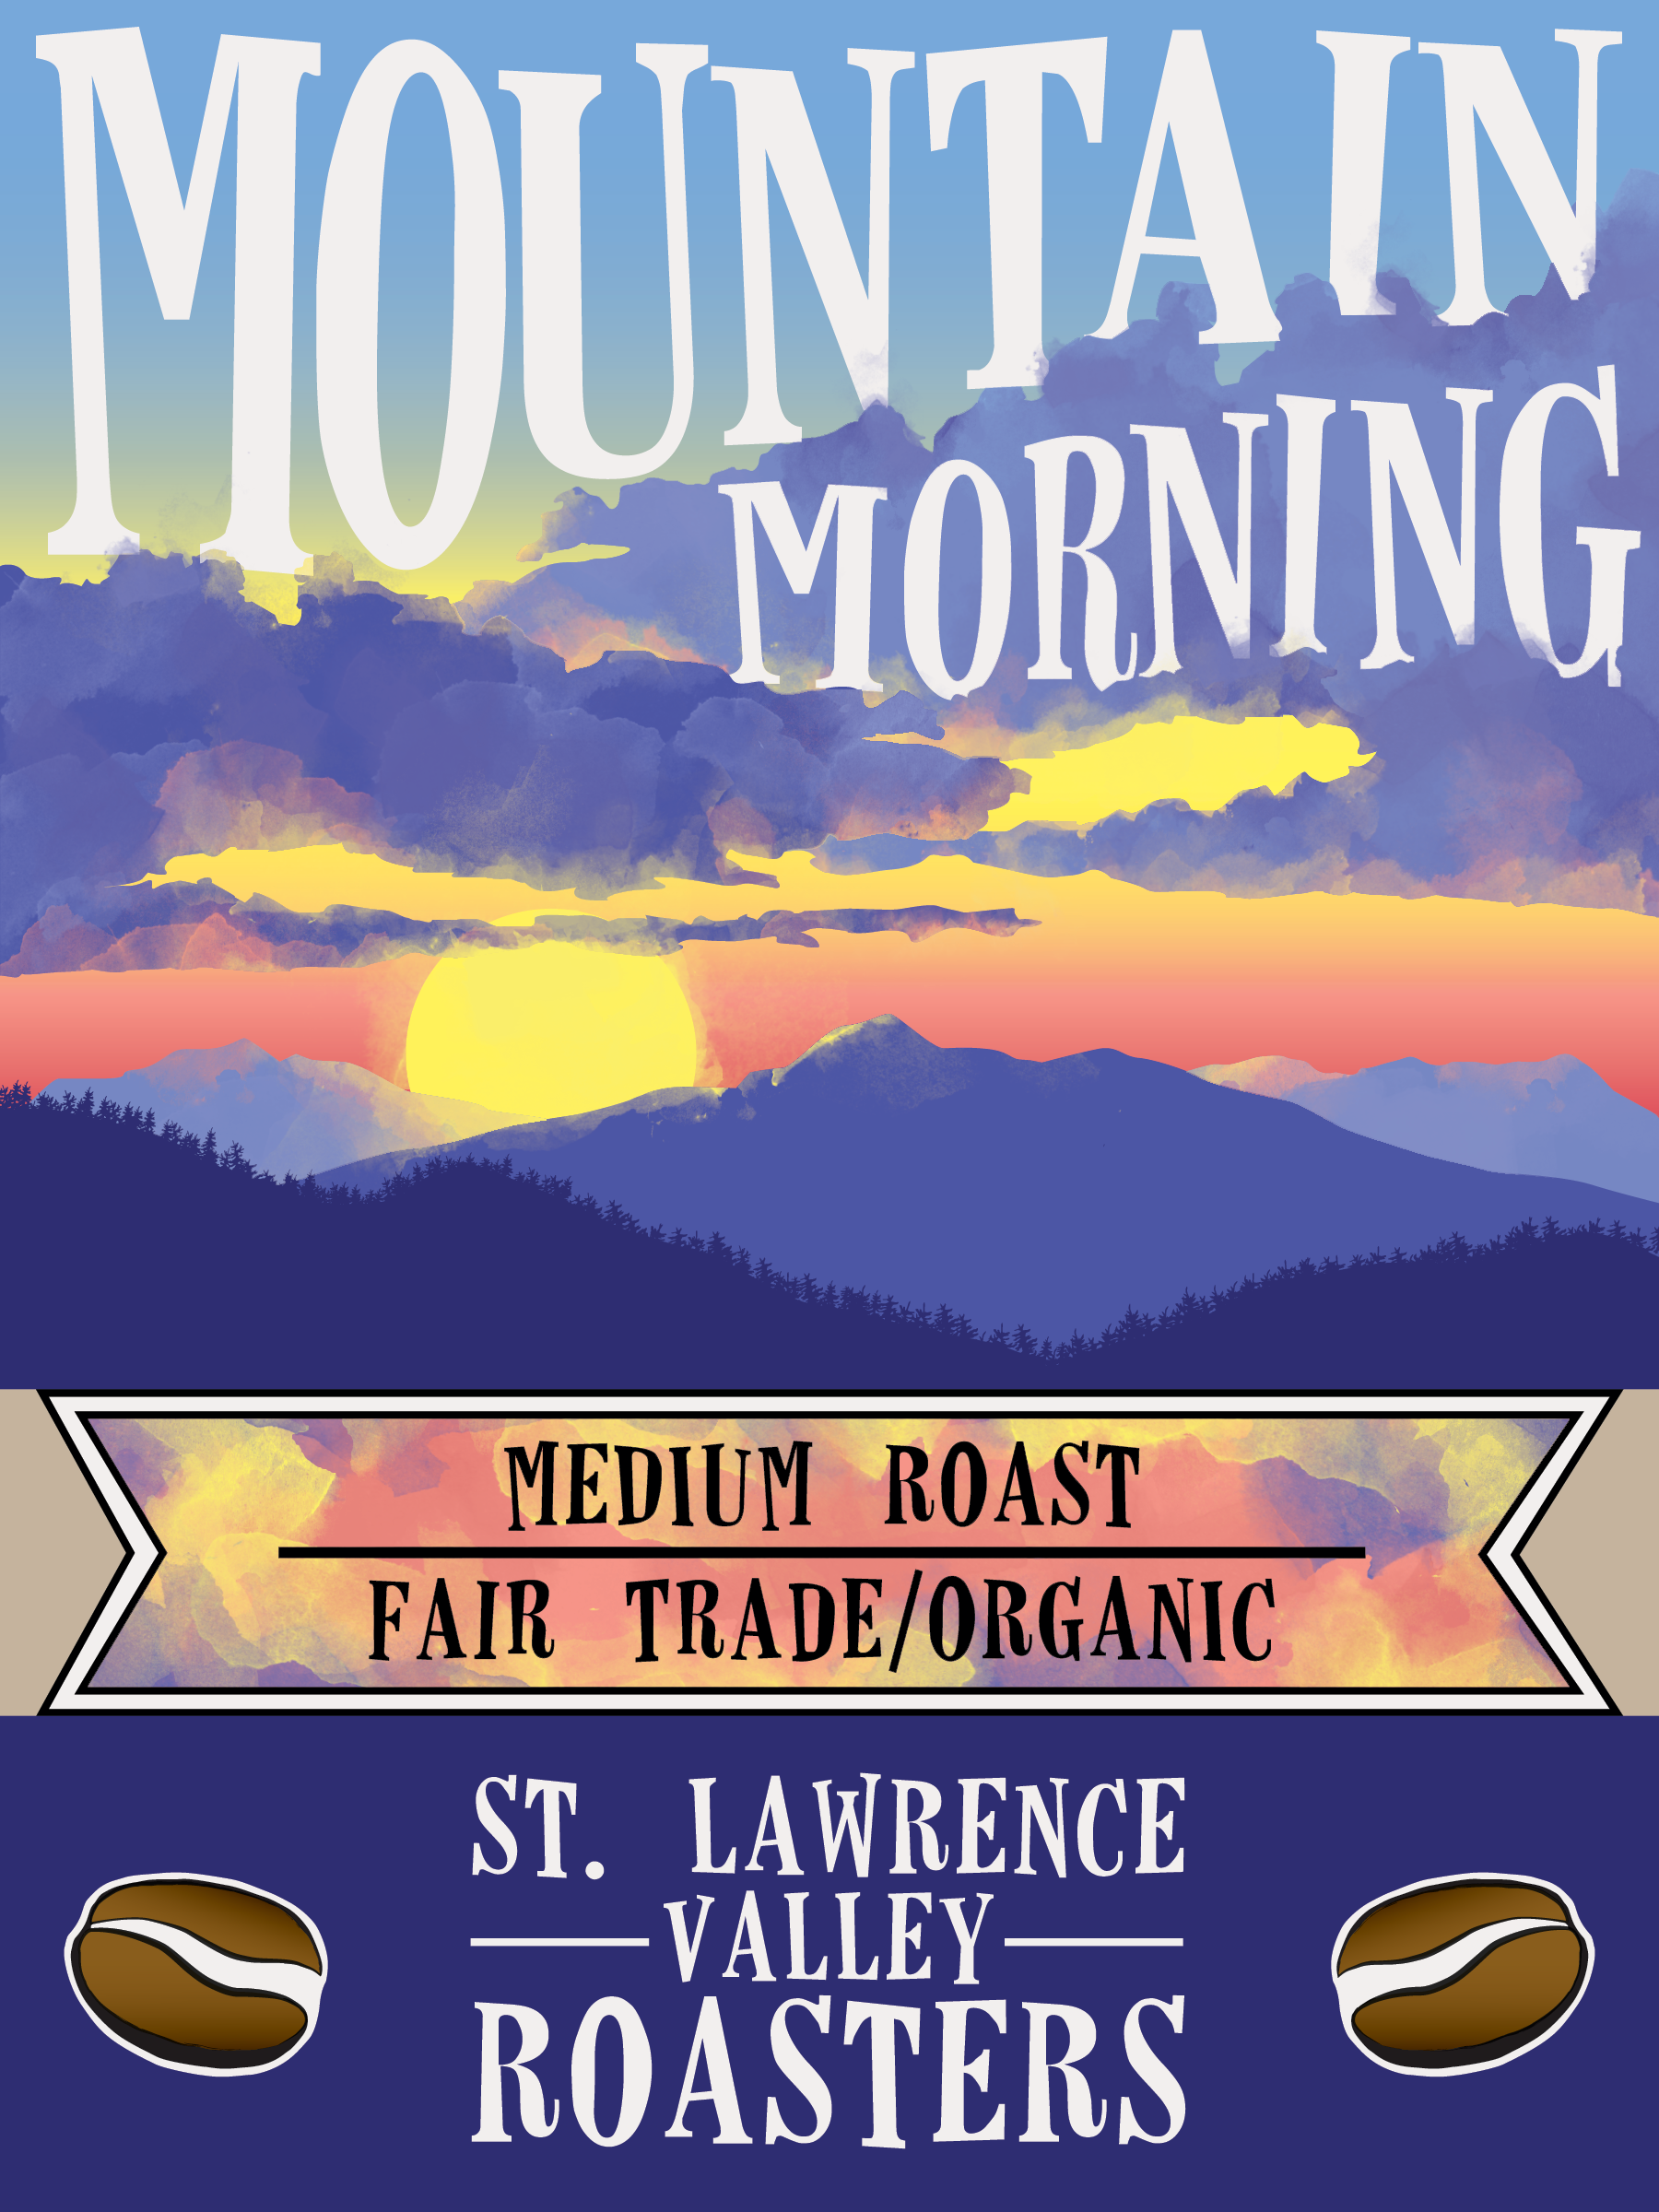 Mountain morning logo. Medium roast. Image of sunrise over high peaks.